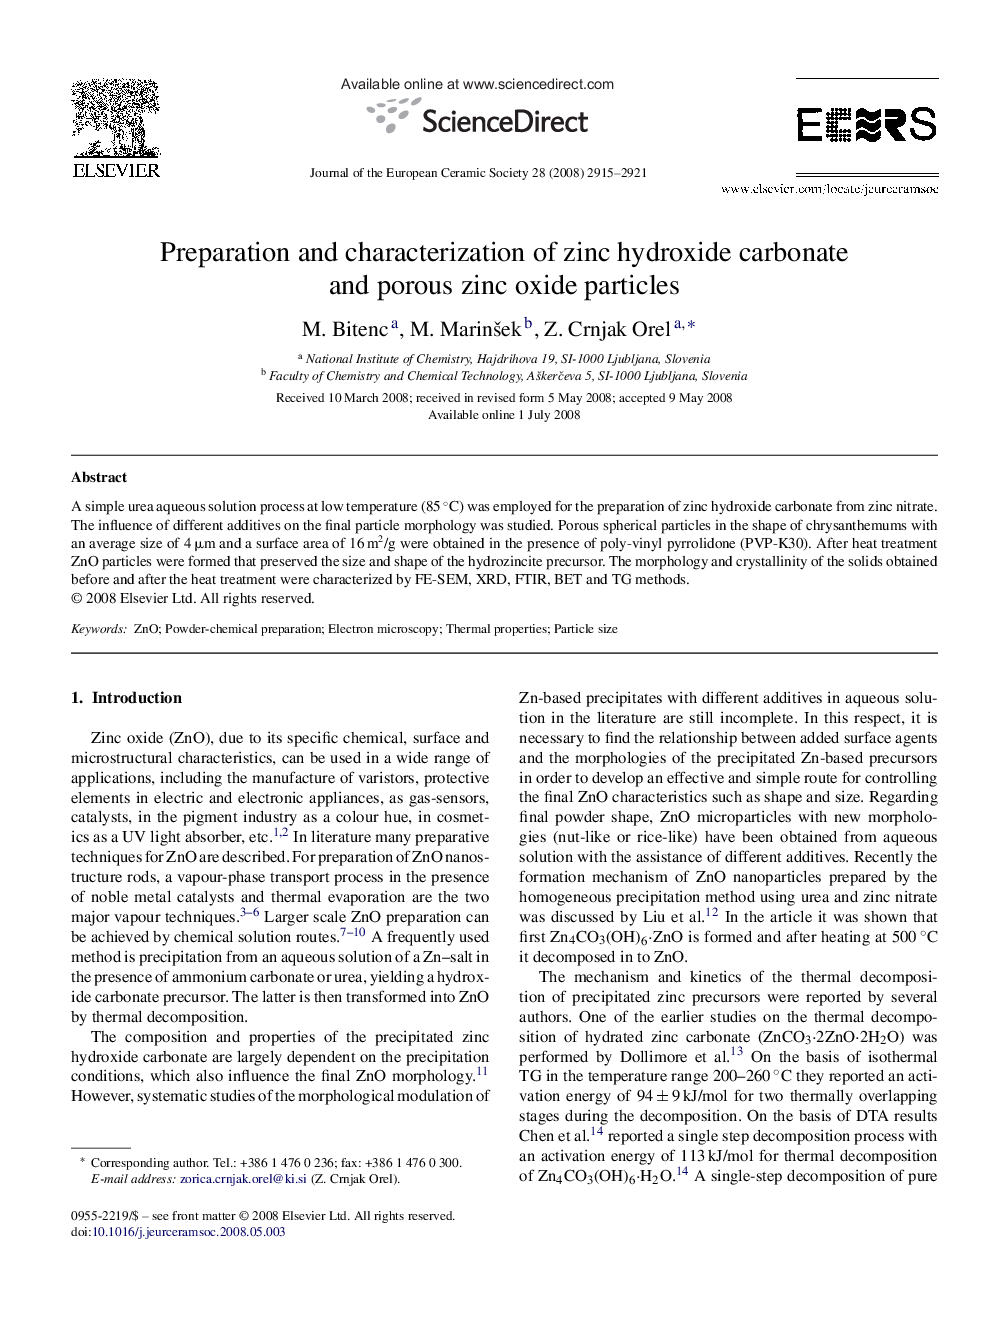 Preparation and characterization of zinc hydroxide carbonate and porous zinc oxide particles